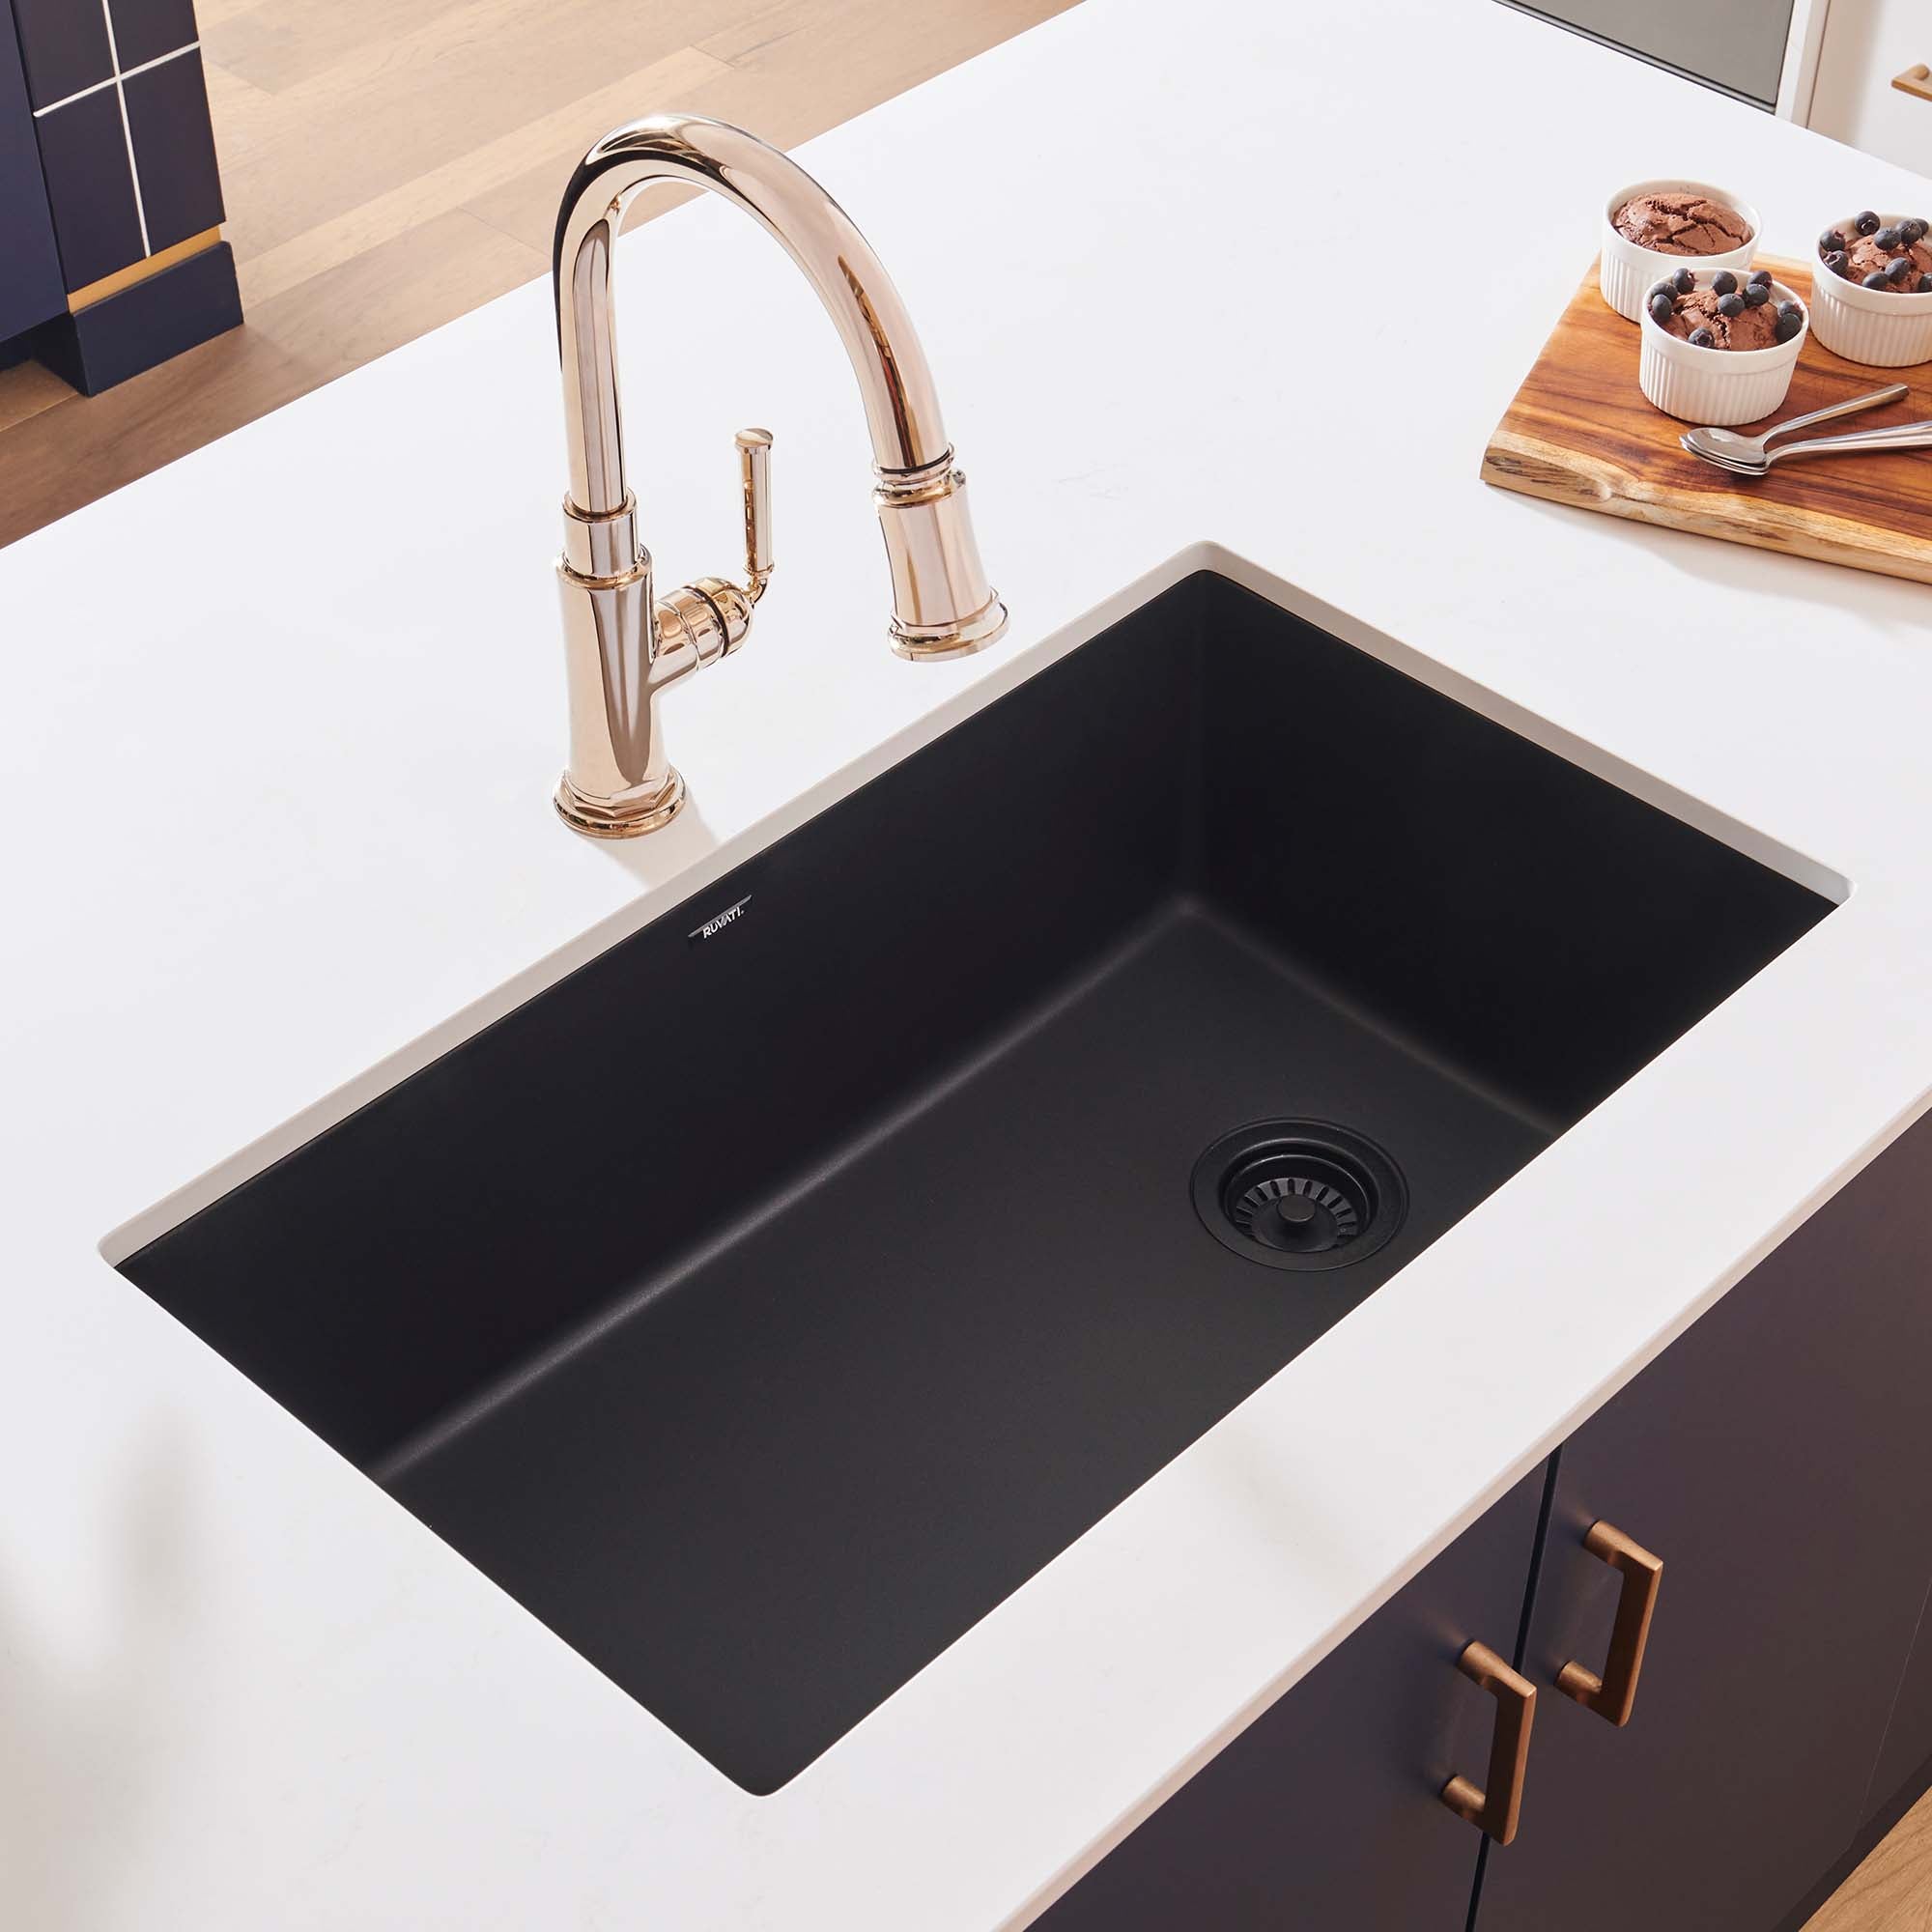 Ruvati 32 x 19 inch epiGranite Undermount Granite Composite Single Bowl Kitchen Sink